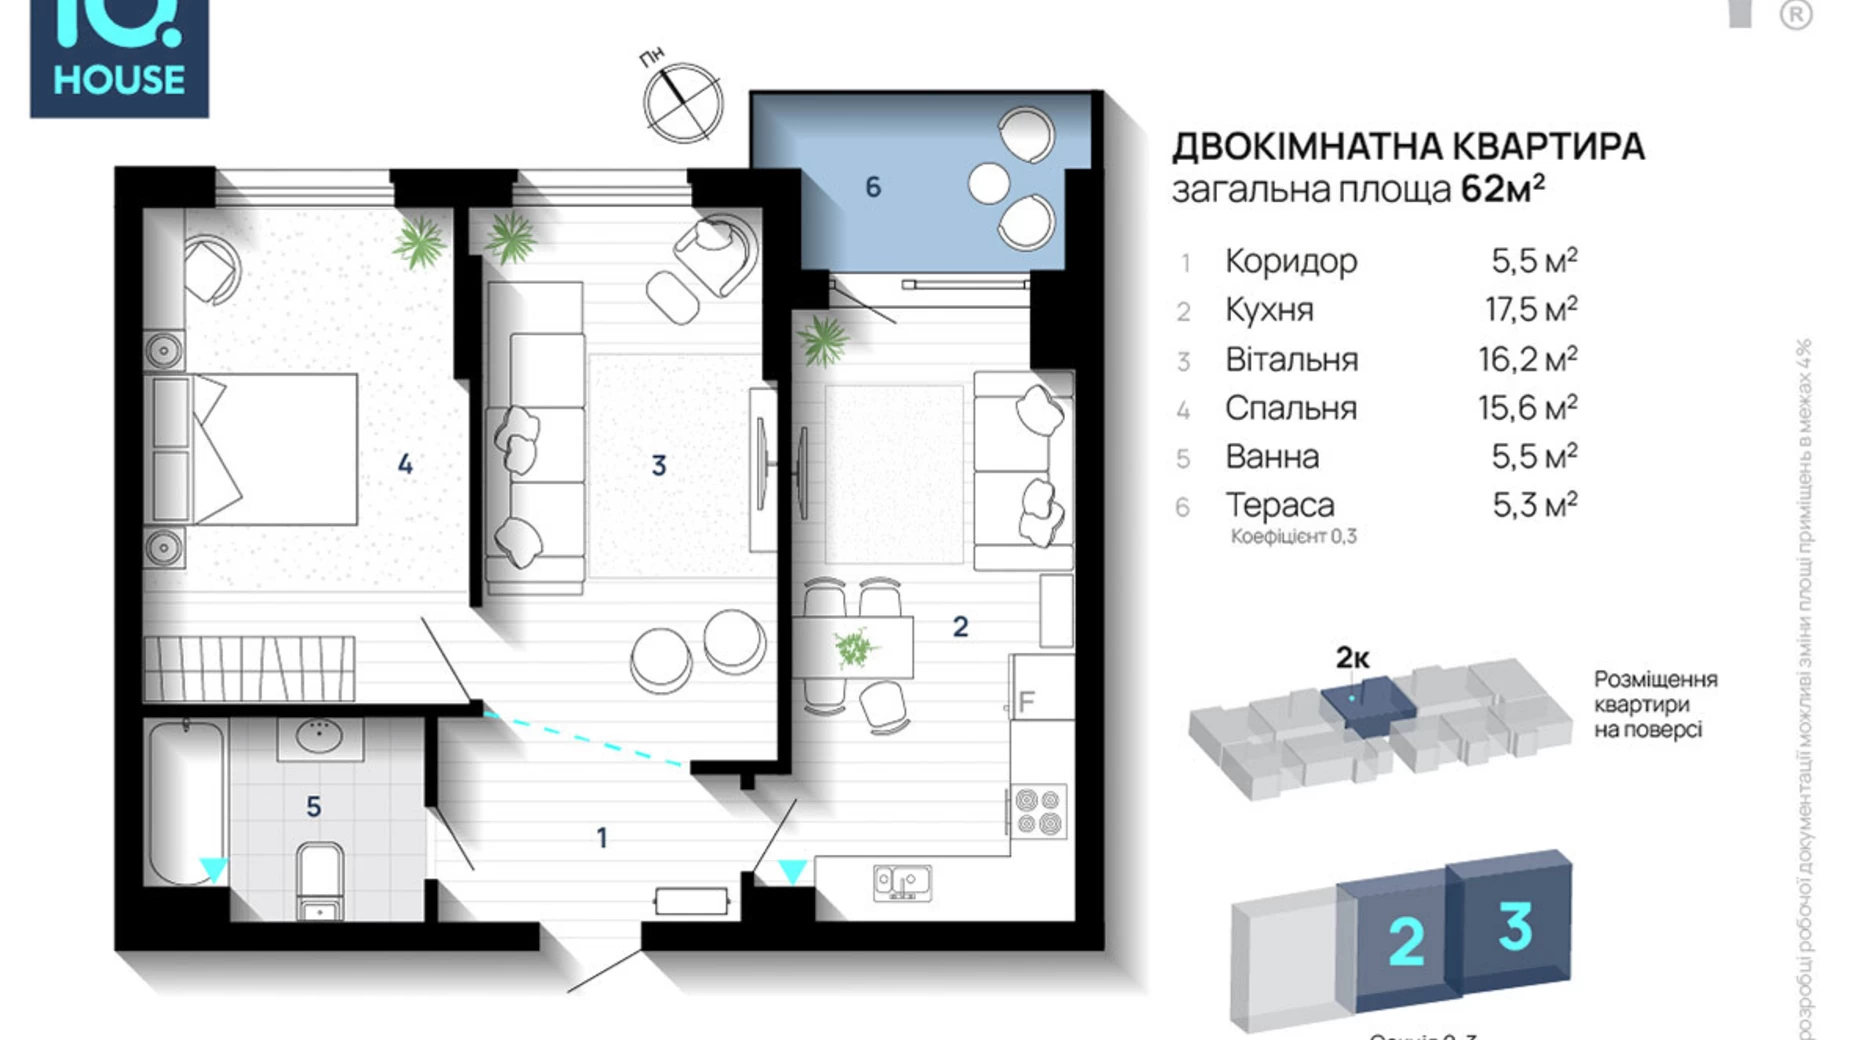 Продается 2-комнатная квартира 62 кв. м в Ивано-Франковске - фото 3